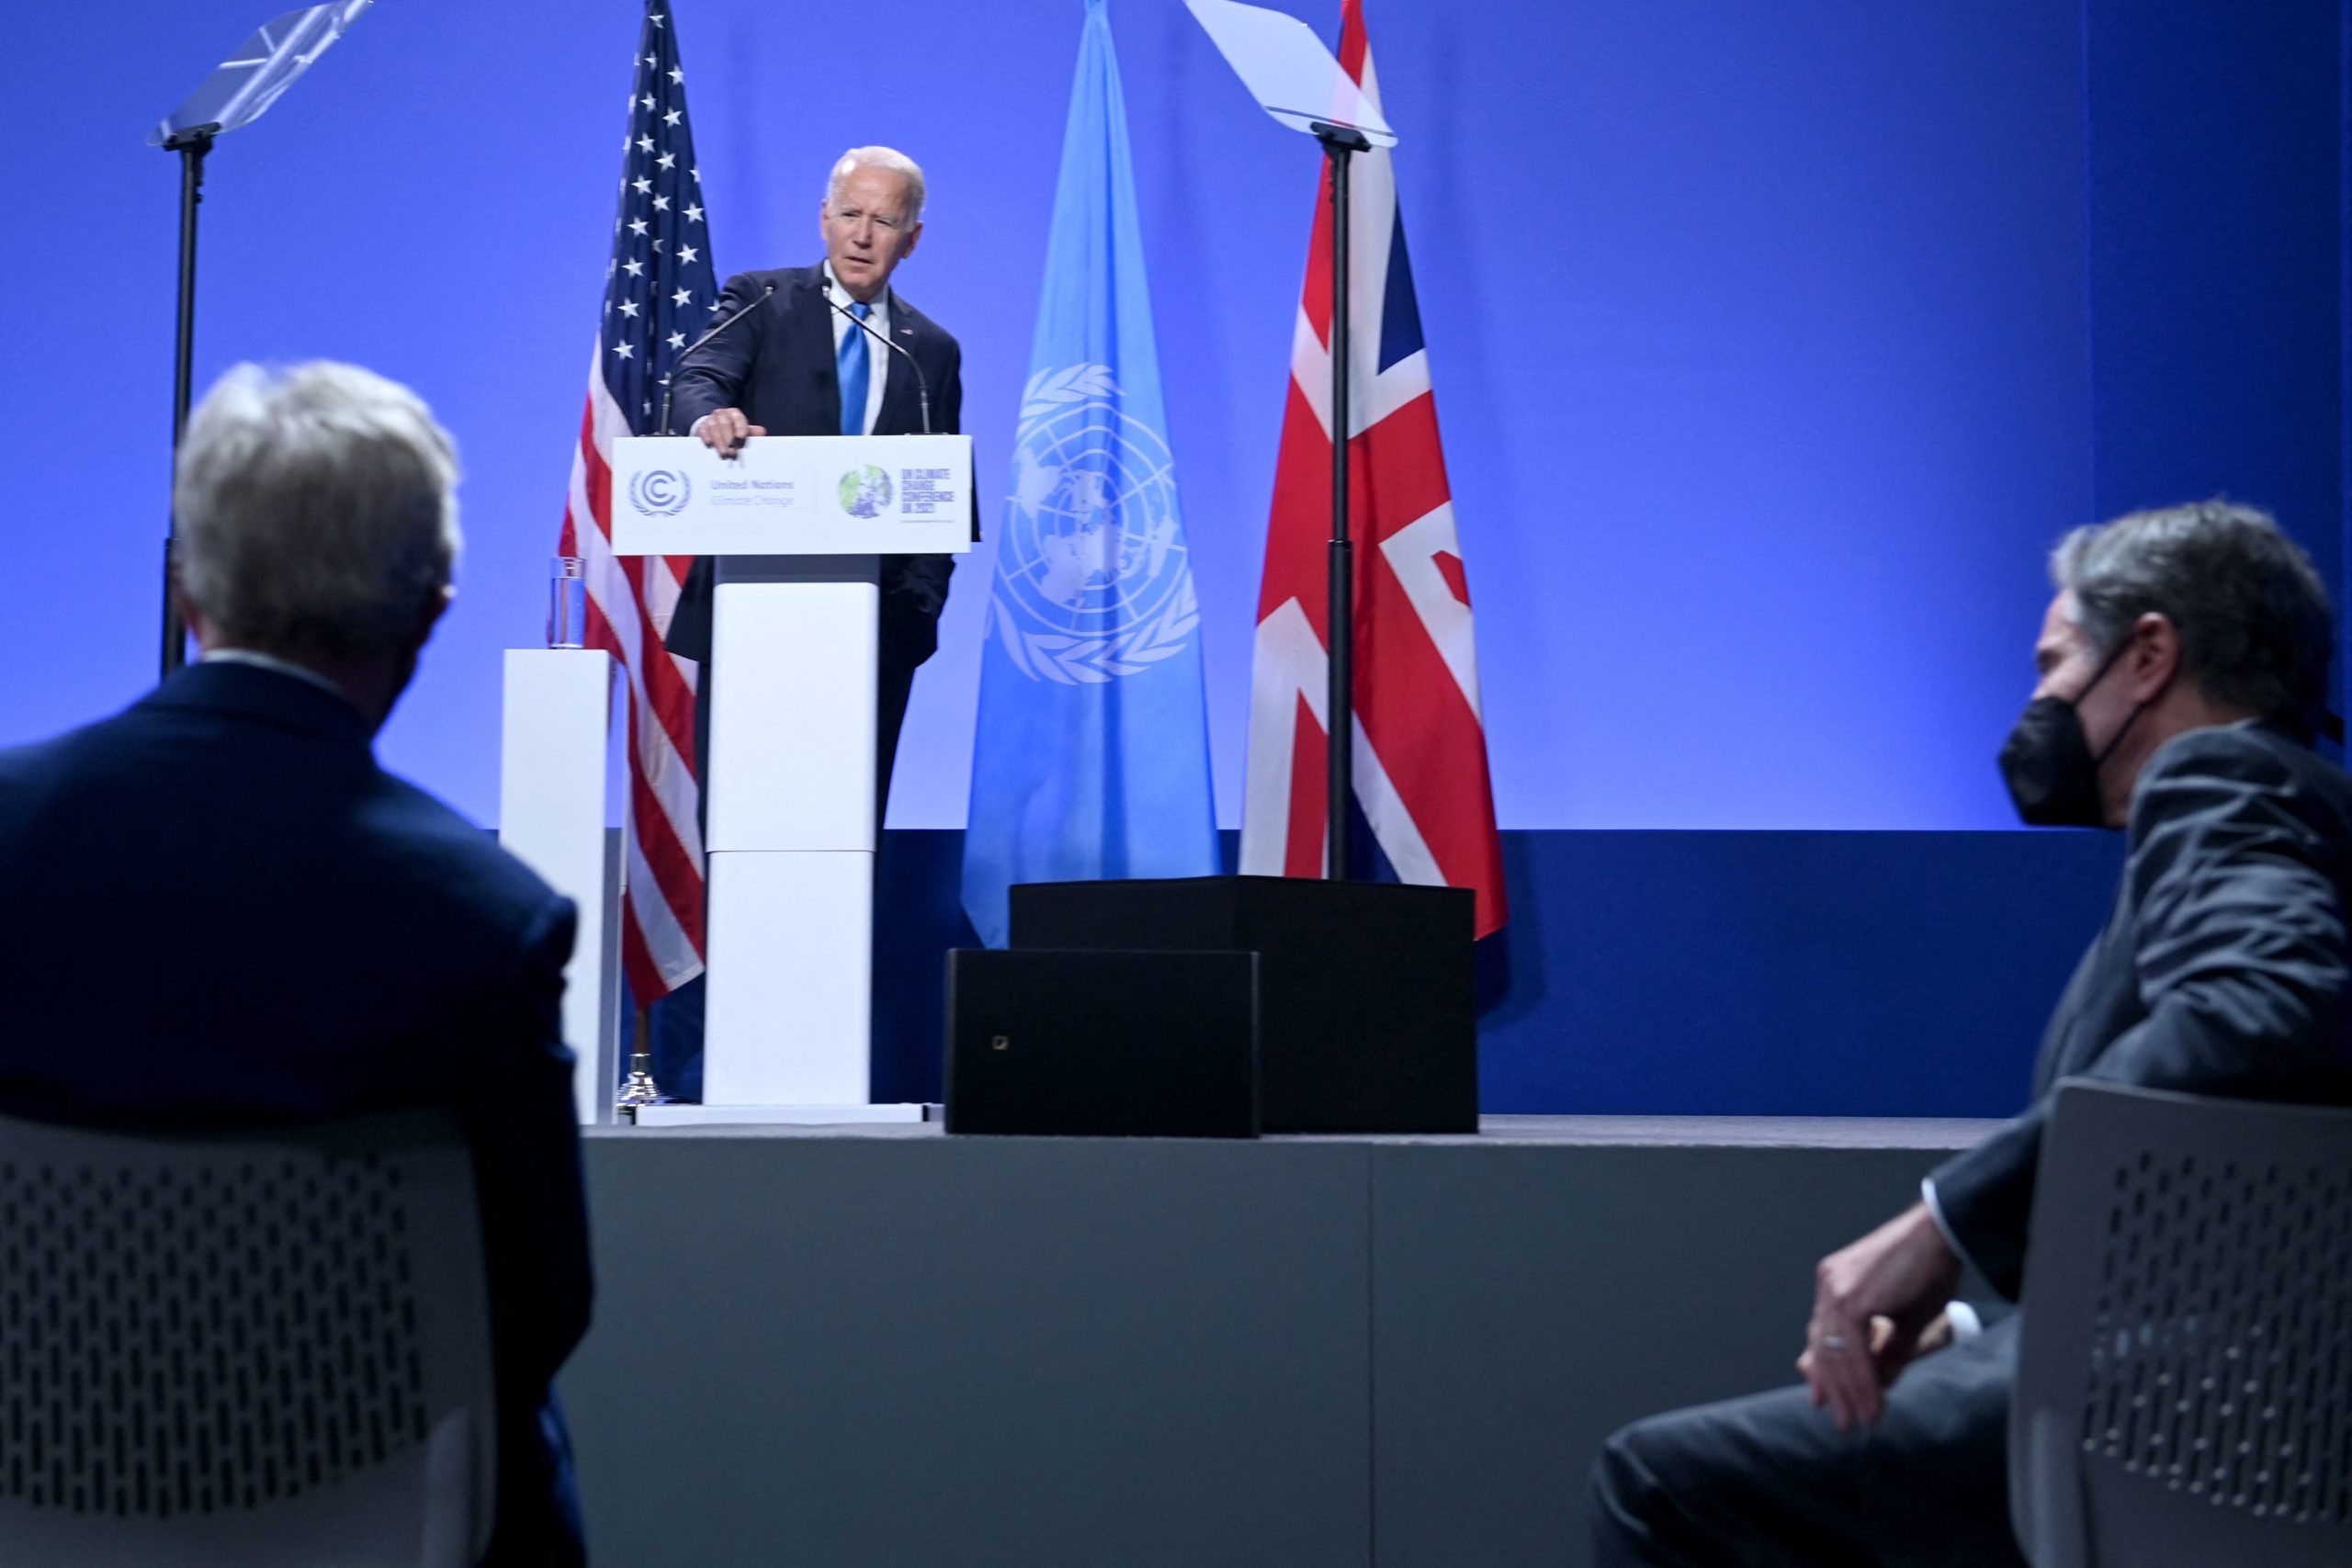 President Joe Biden addresses a press conference at the COP26 Climate Change Conference in Glasgow, U.K. on Nov. 2. (Brendan Smialowski/AFP via Getty Images)